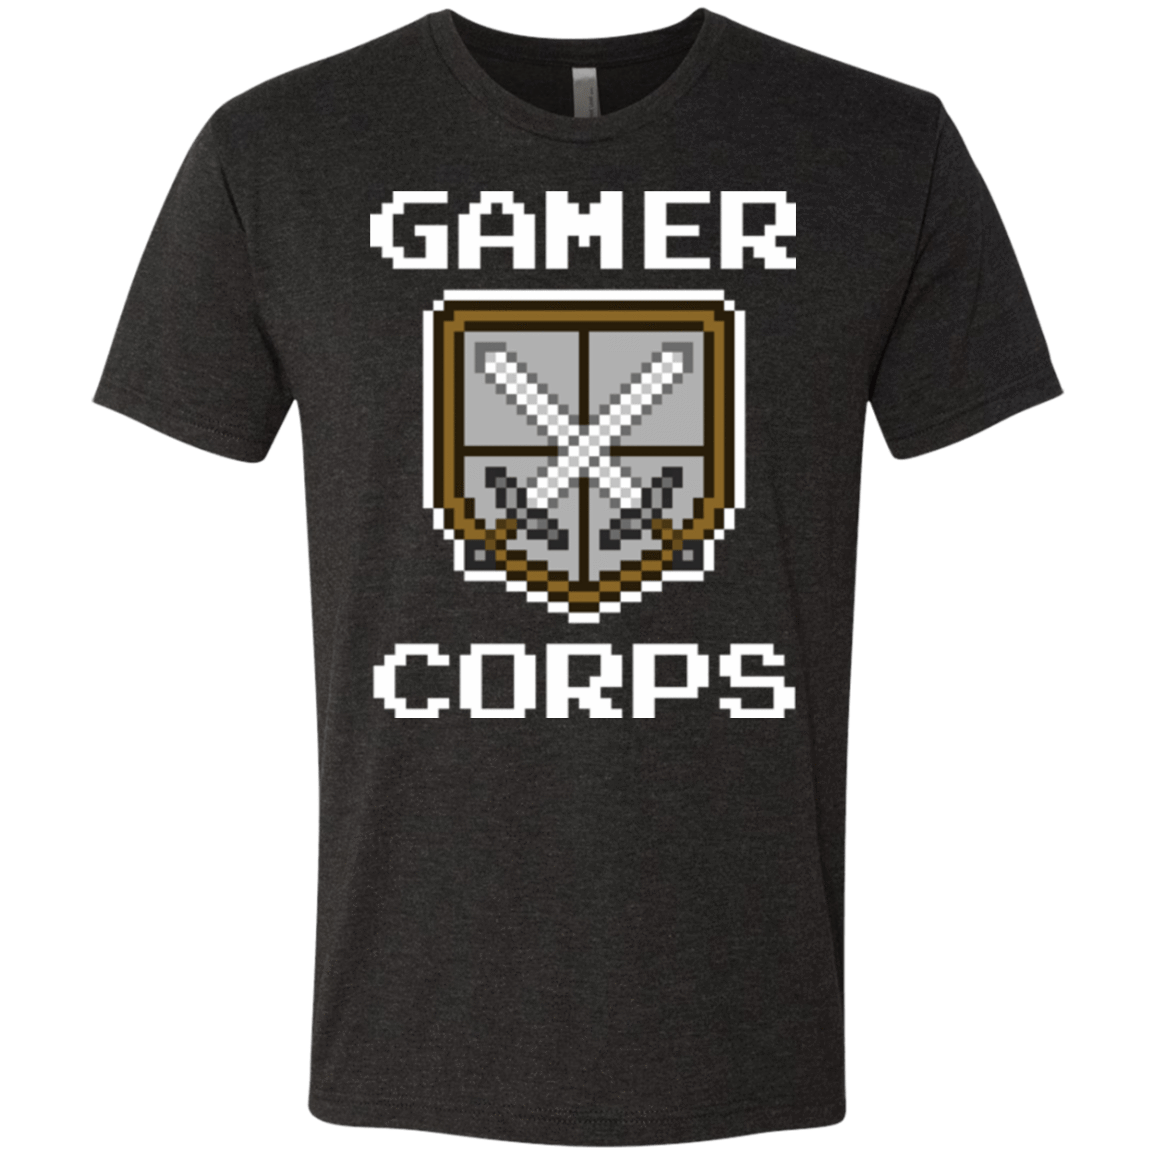 T-Shirts Vintage Black / Small Gamer corps Men's Triblend T-Shirt